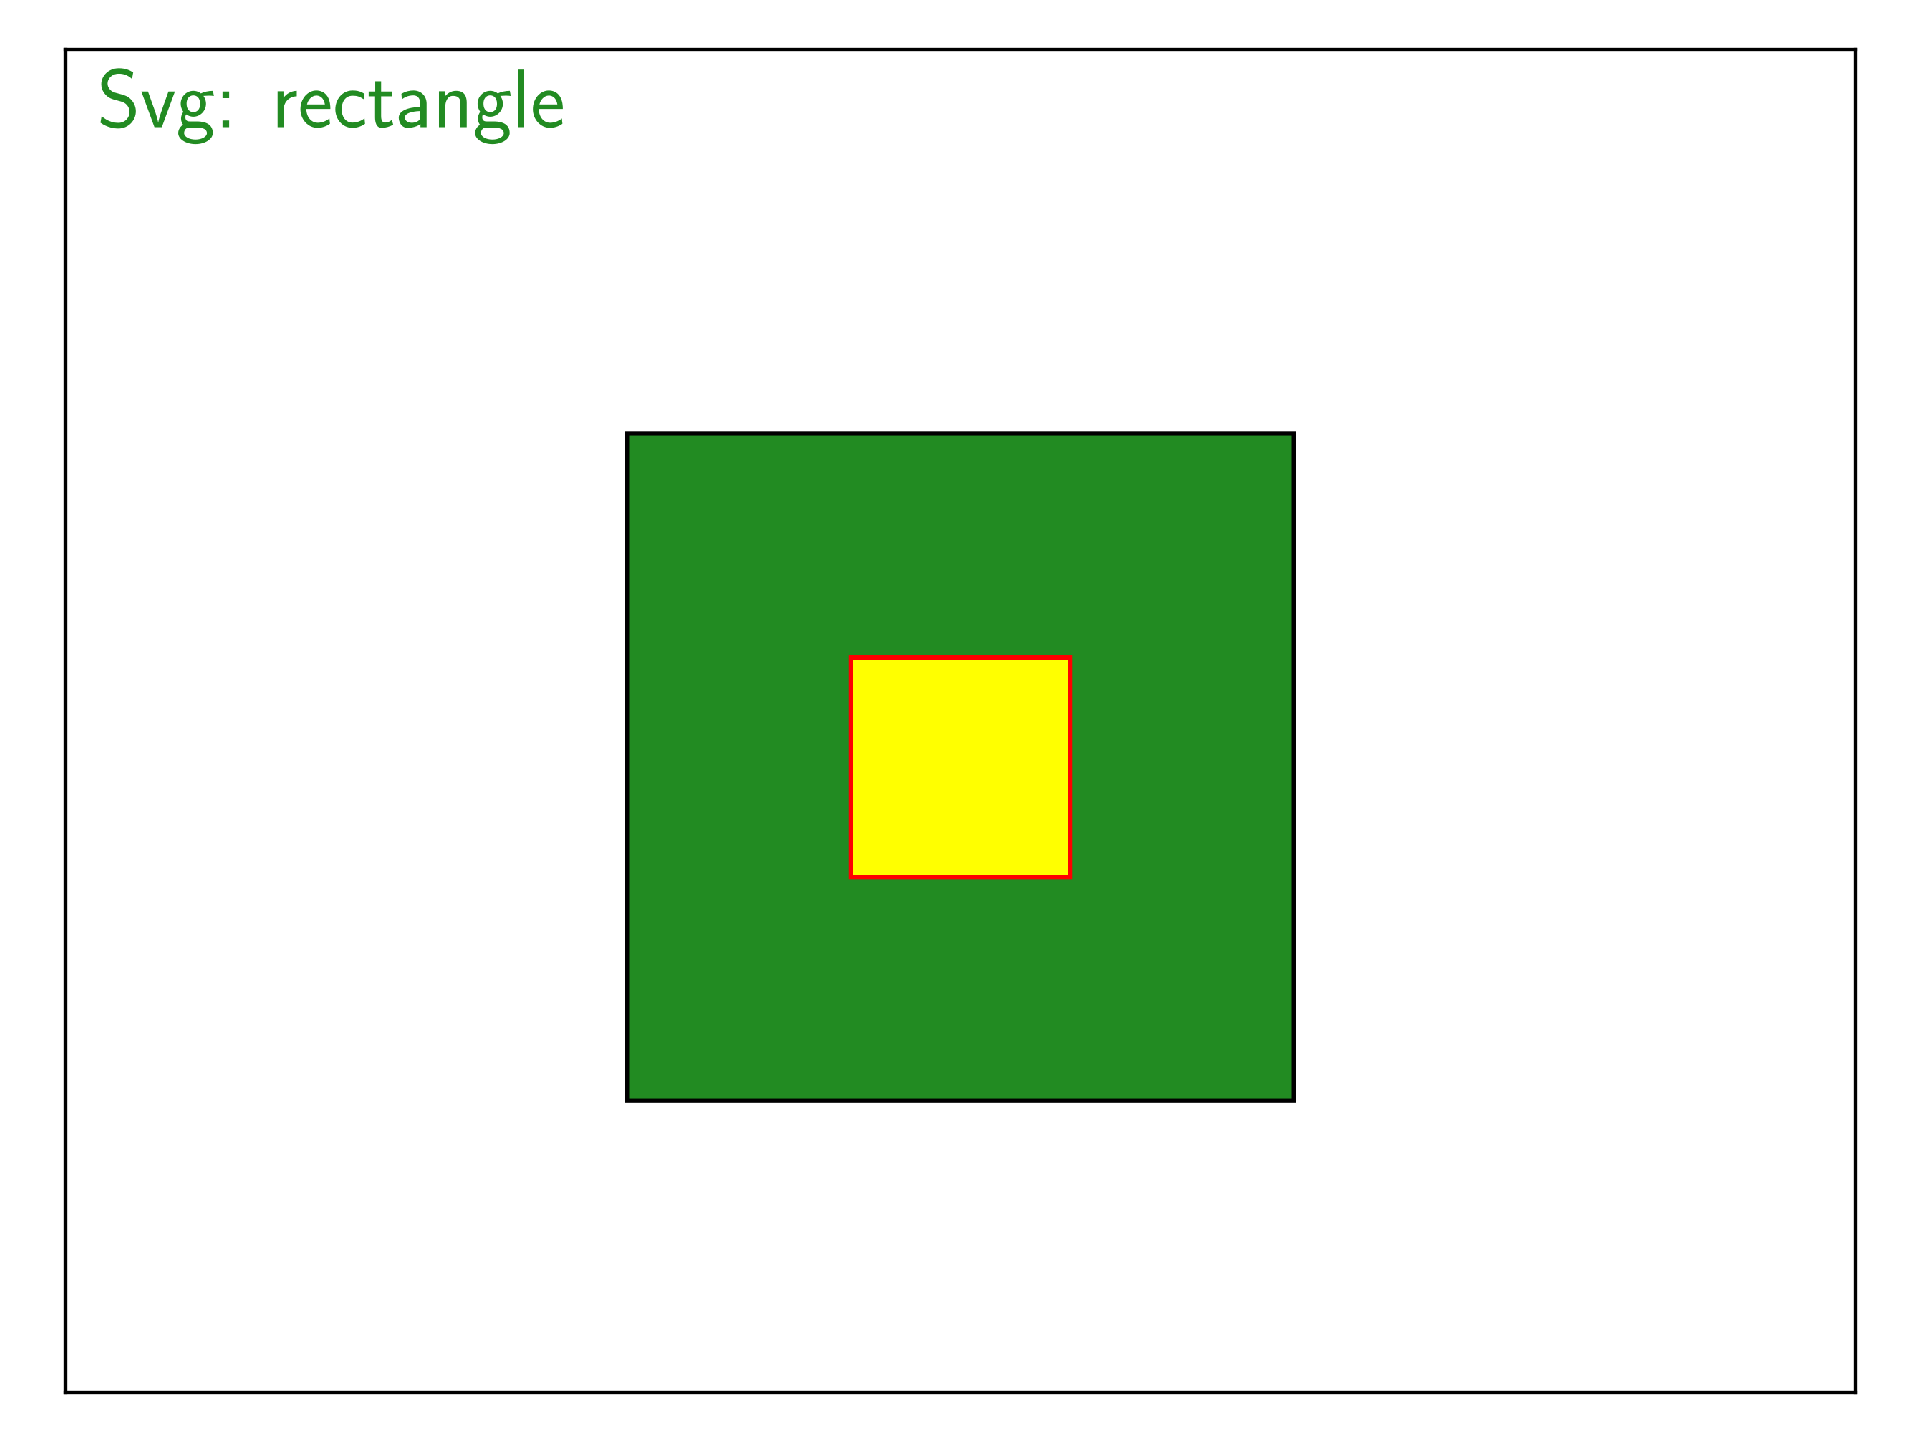 ../_images/sphx_glr_plot_rectangle_001.png